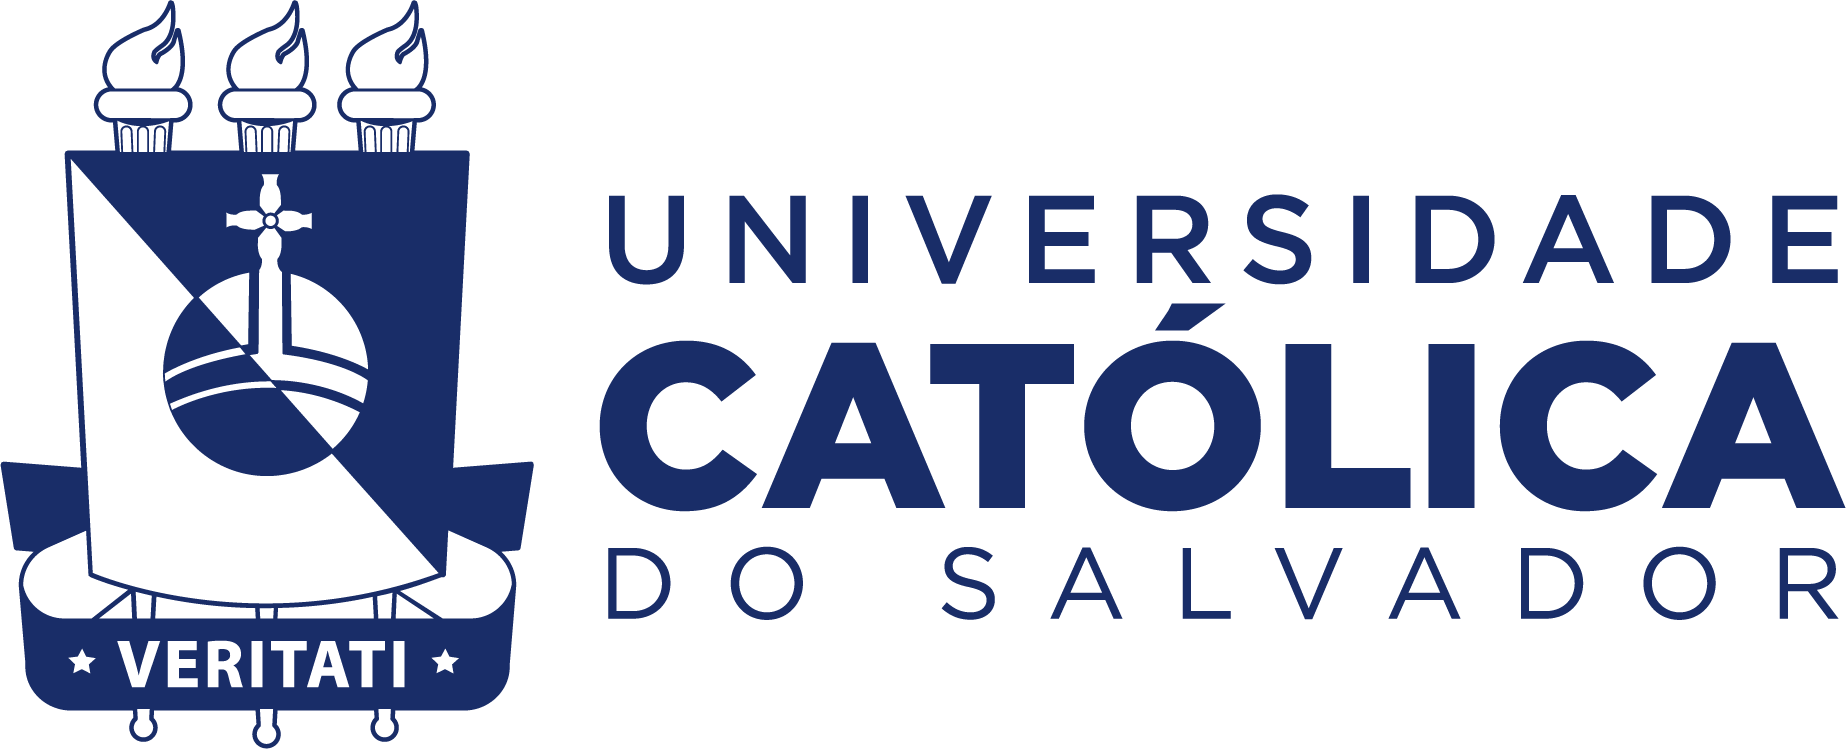 Catholic University of Salvador logo